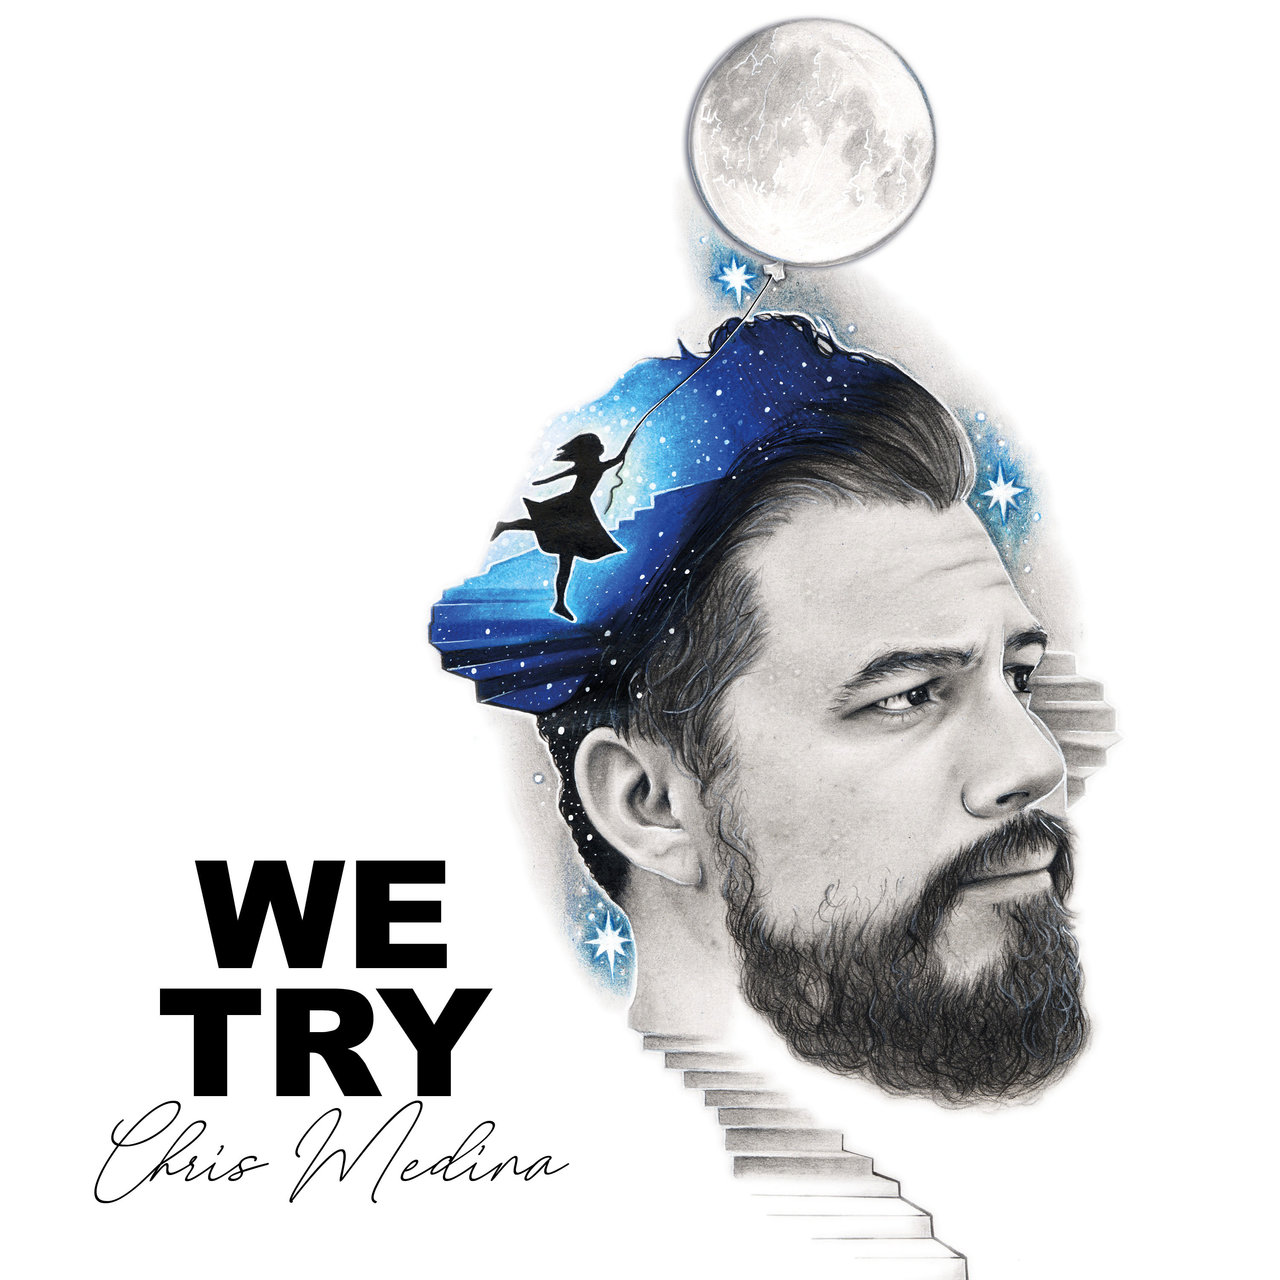 Chris Medina — We Try cover artwork